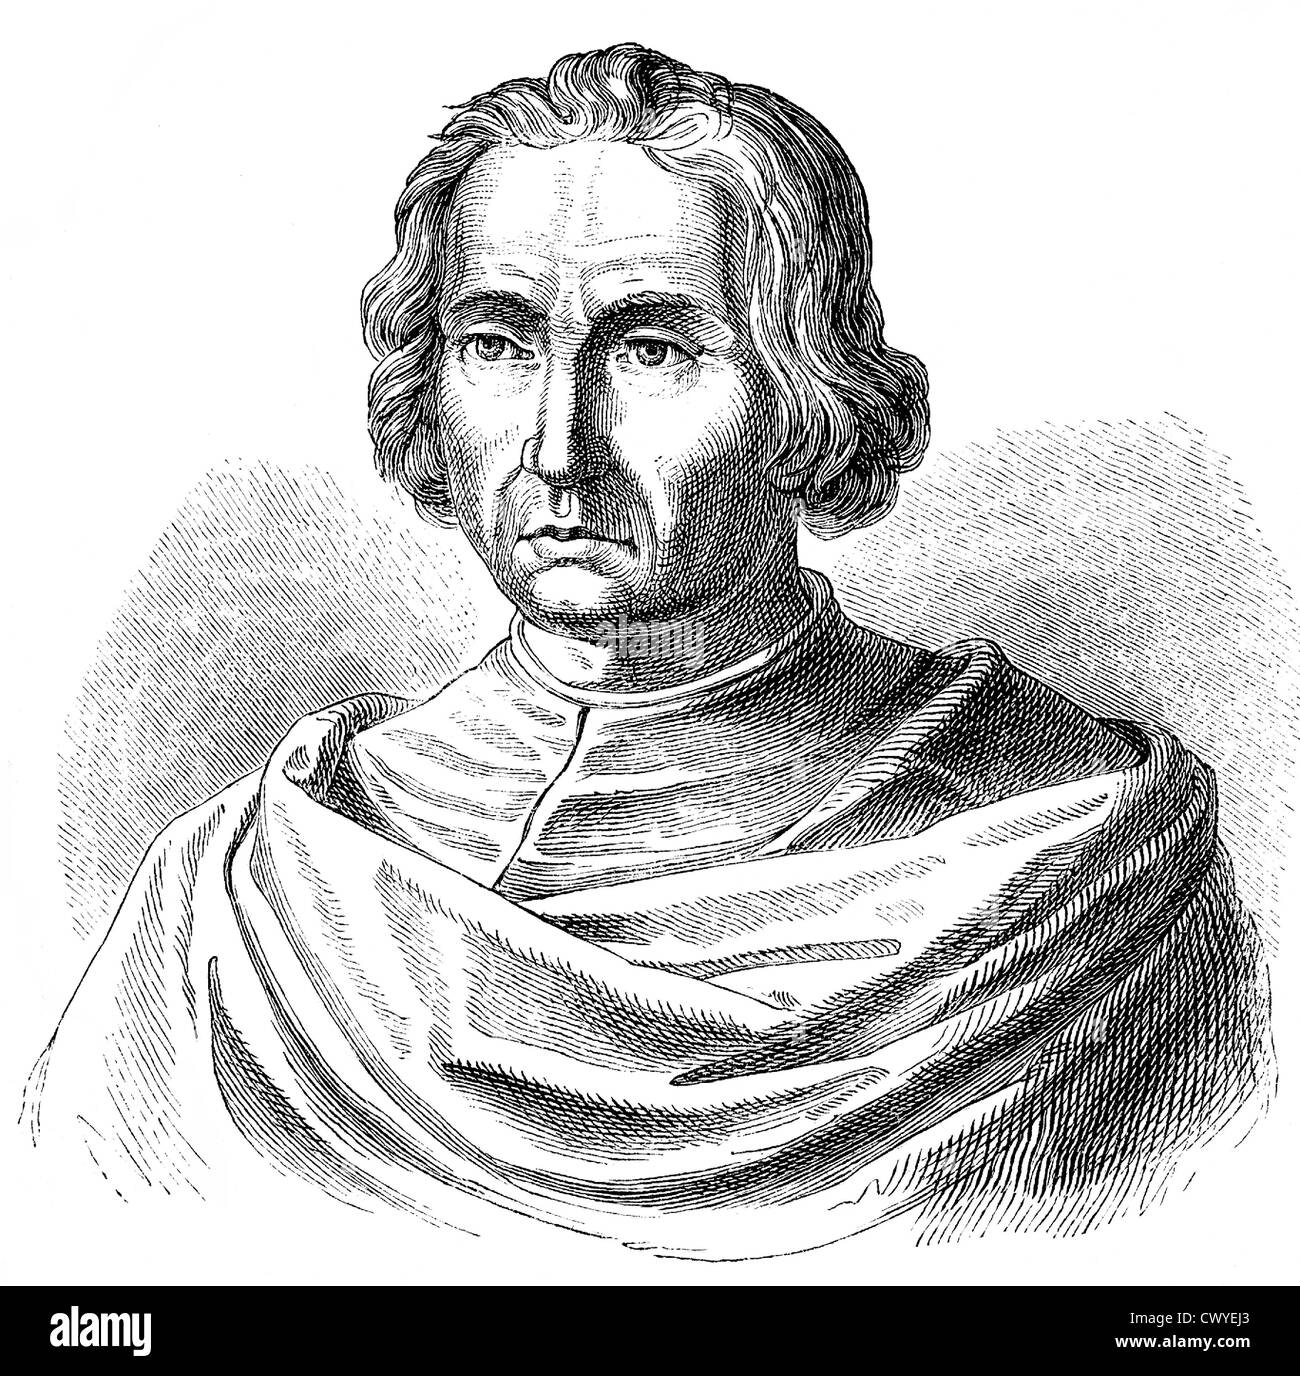 Christopher Columbus Portrait in Line Art Illustration Stock Vector   Illustration of colonizer engraving 142543582